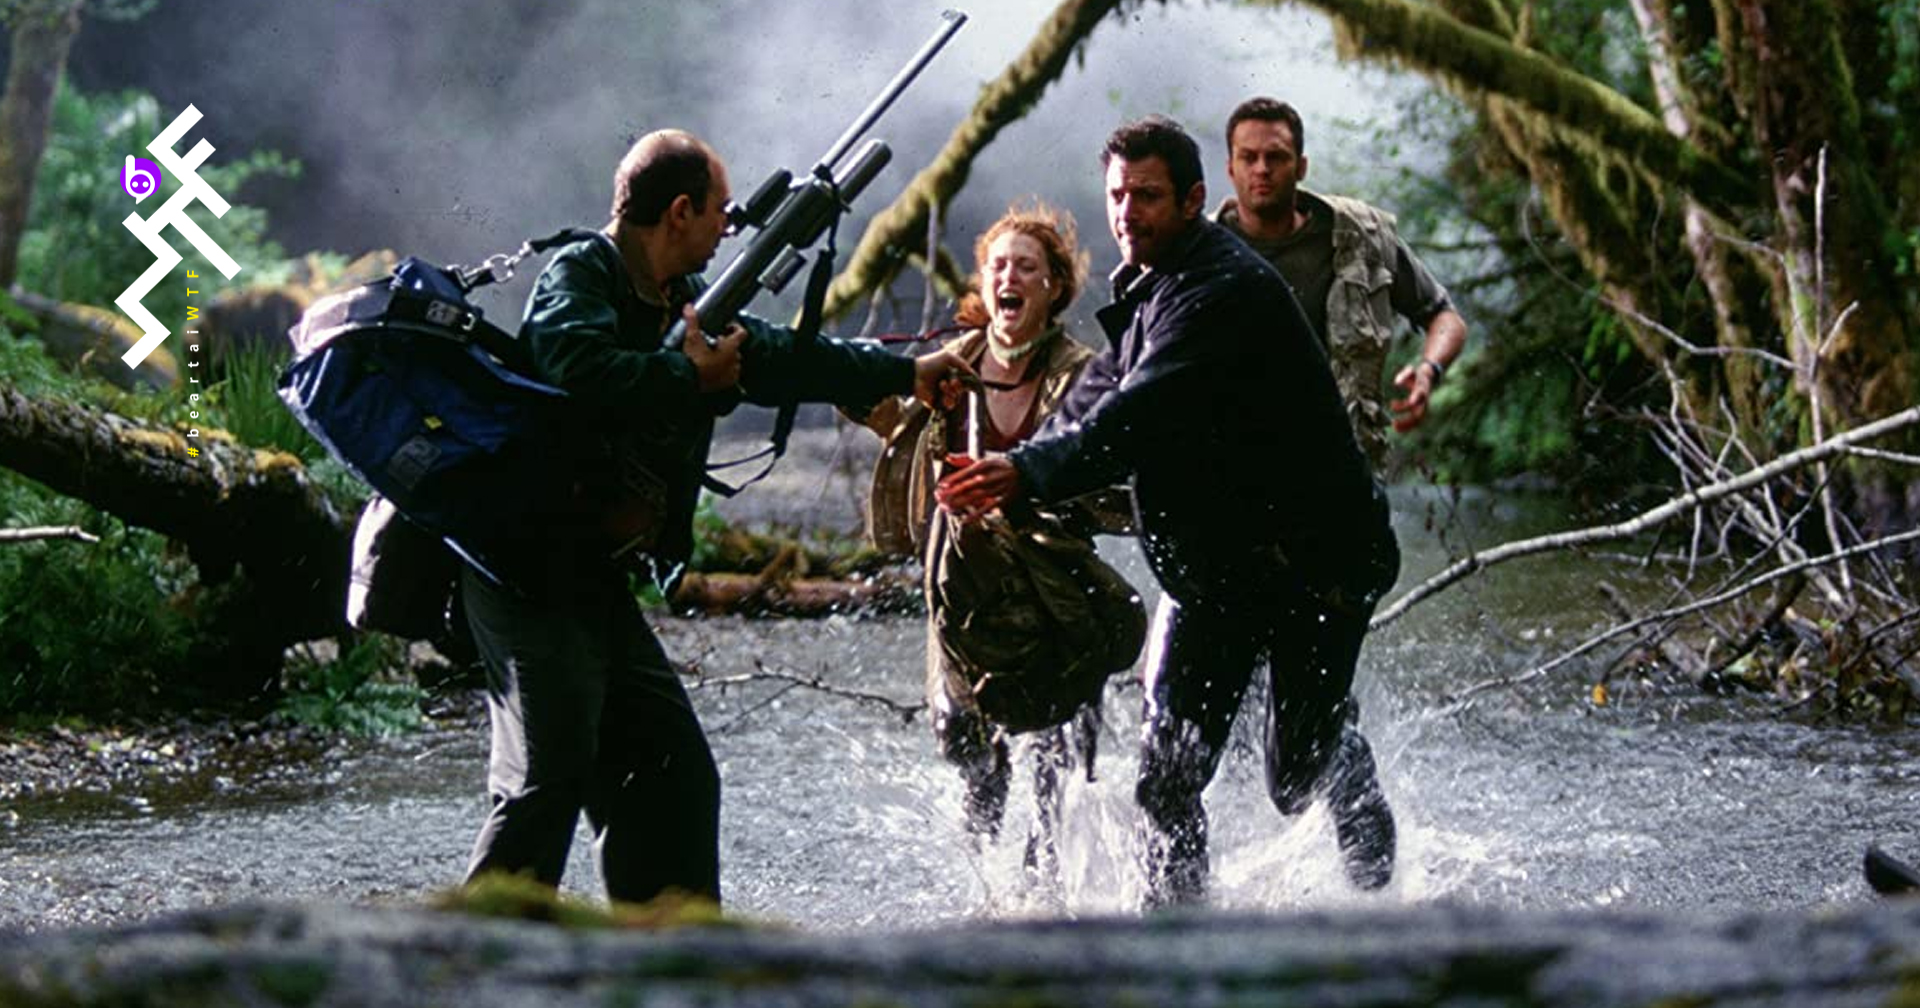 Jurassic World 3 ปล่อยภาพ “ของ” จากเกาะ Isla Sorna ในภาค The Lost World: Jurassic Park